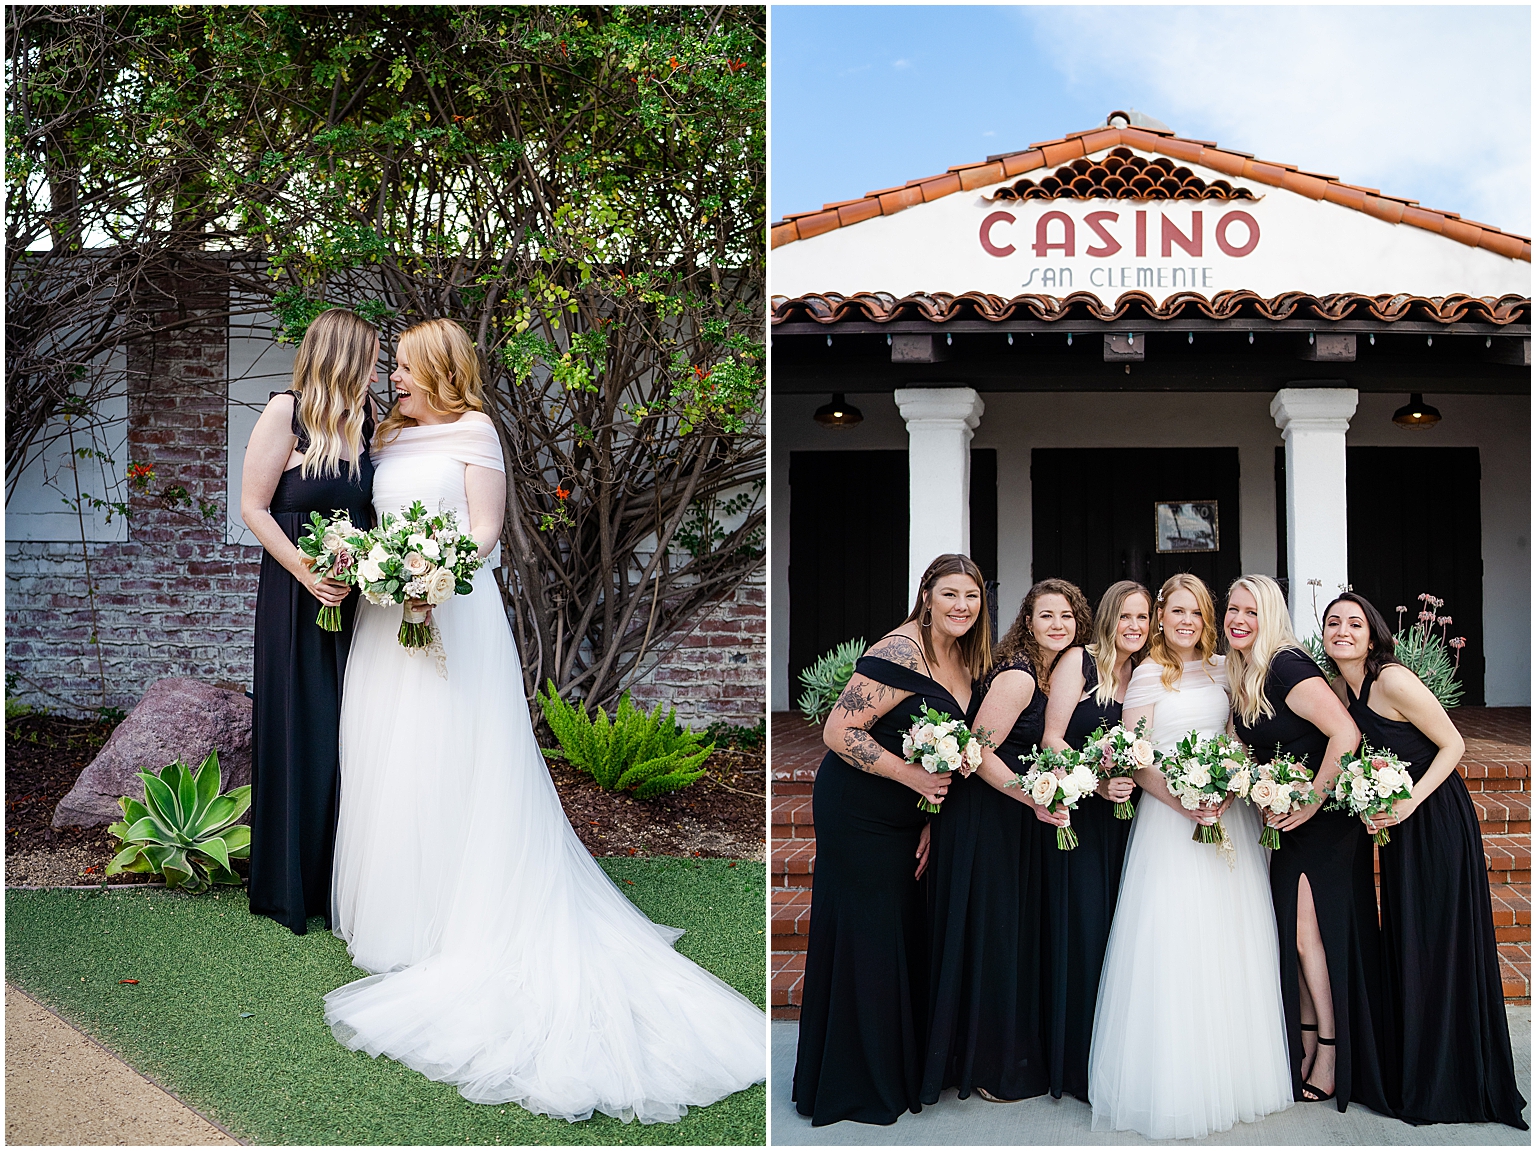 Casino San Clemente Wedding Bridal Party